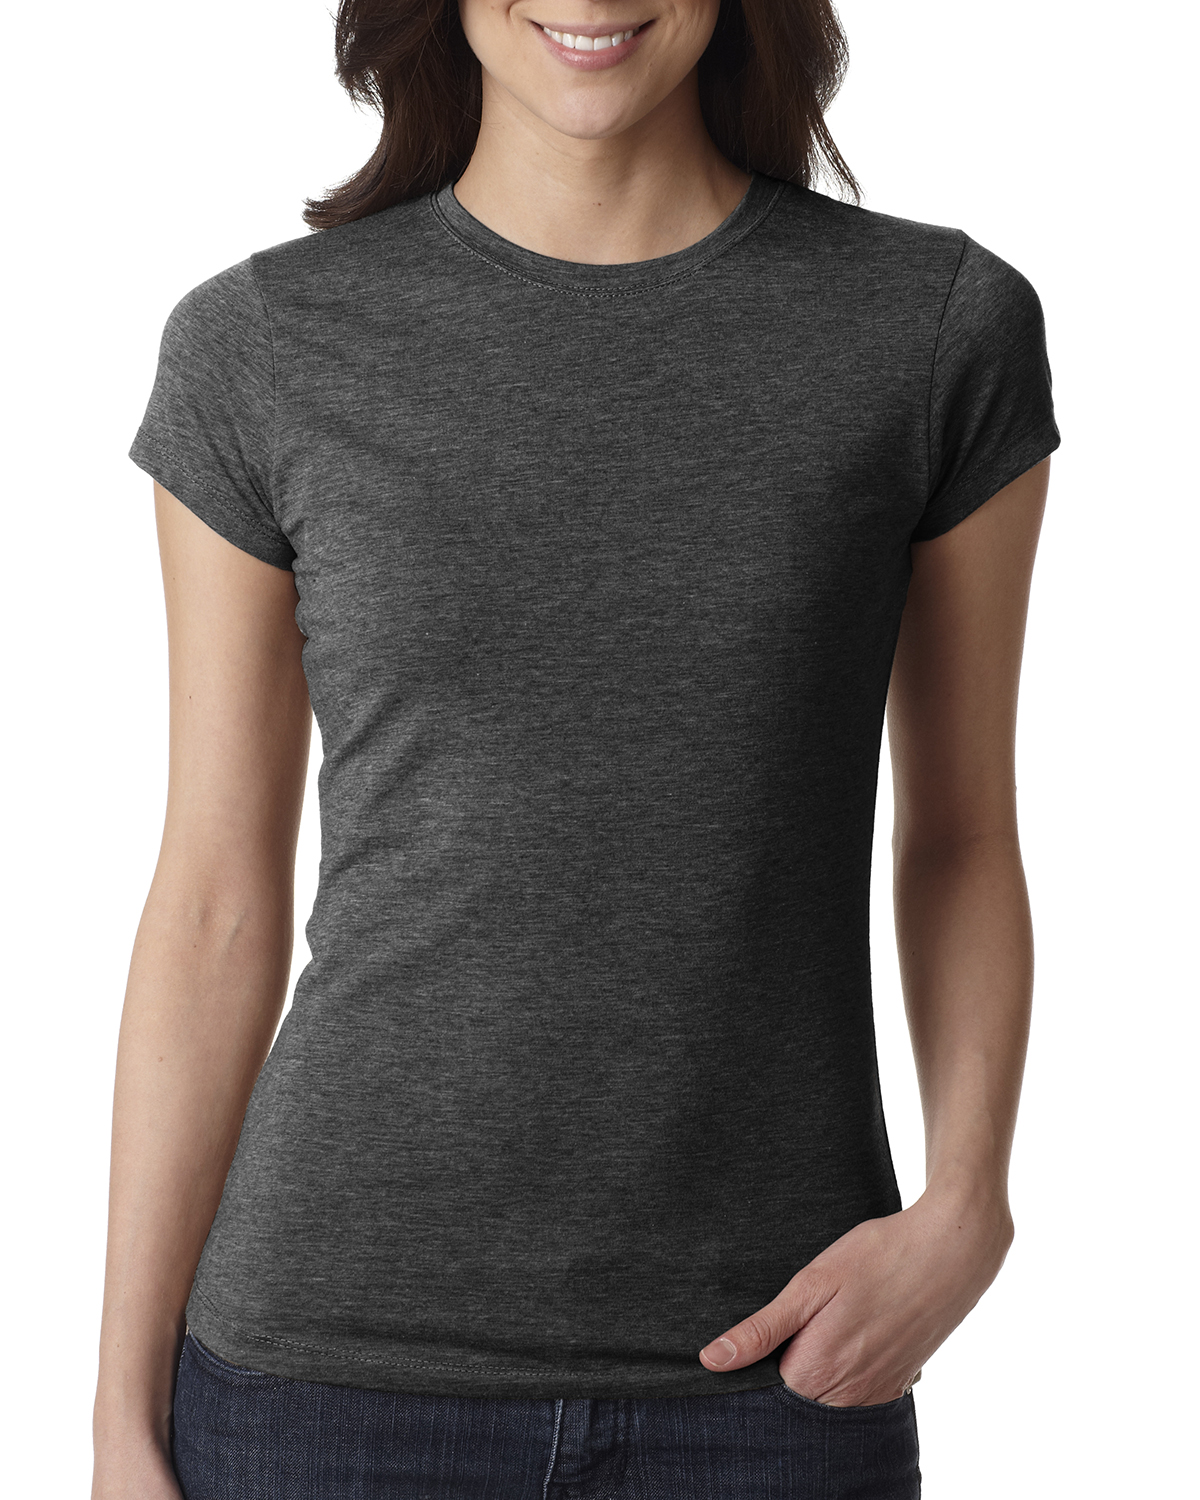 Next Level 6000L-Ladies Poly/Cotton Tee $3.82 - Women's T-Shirts